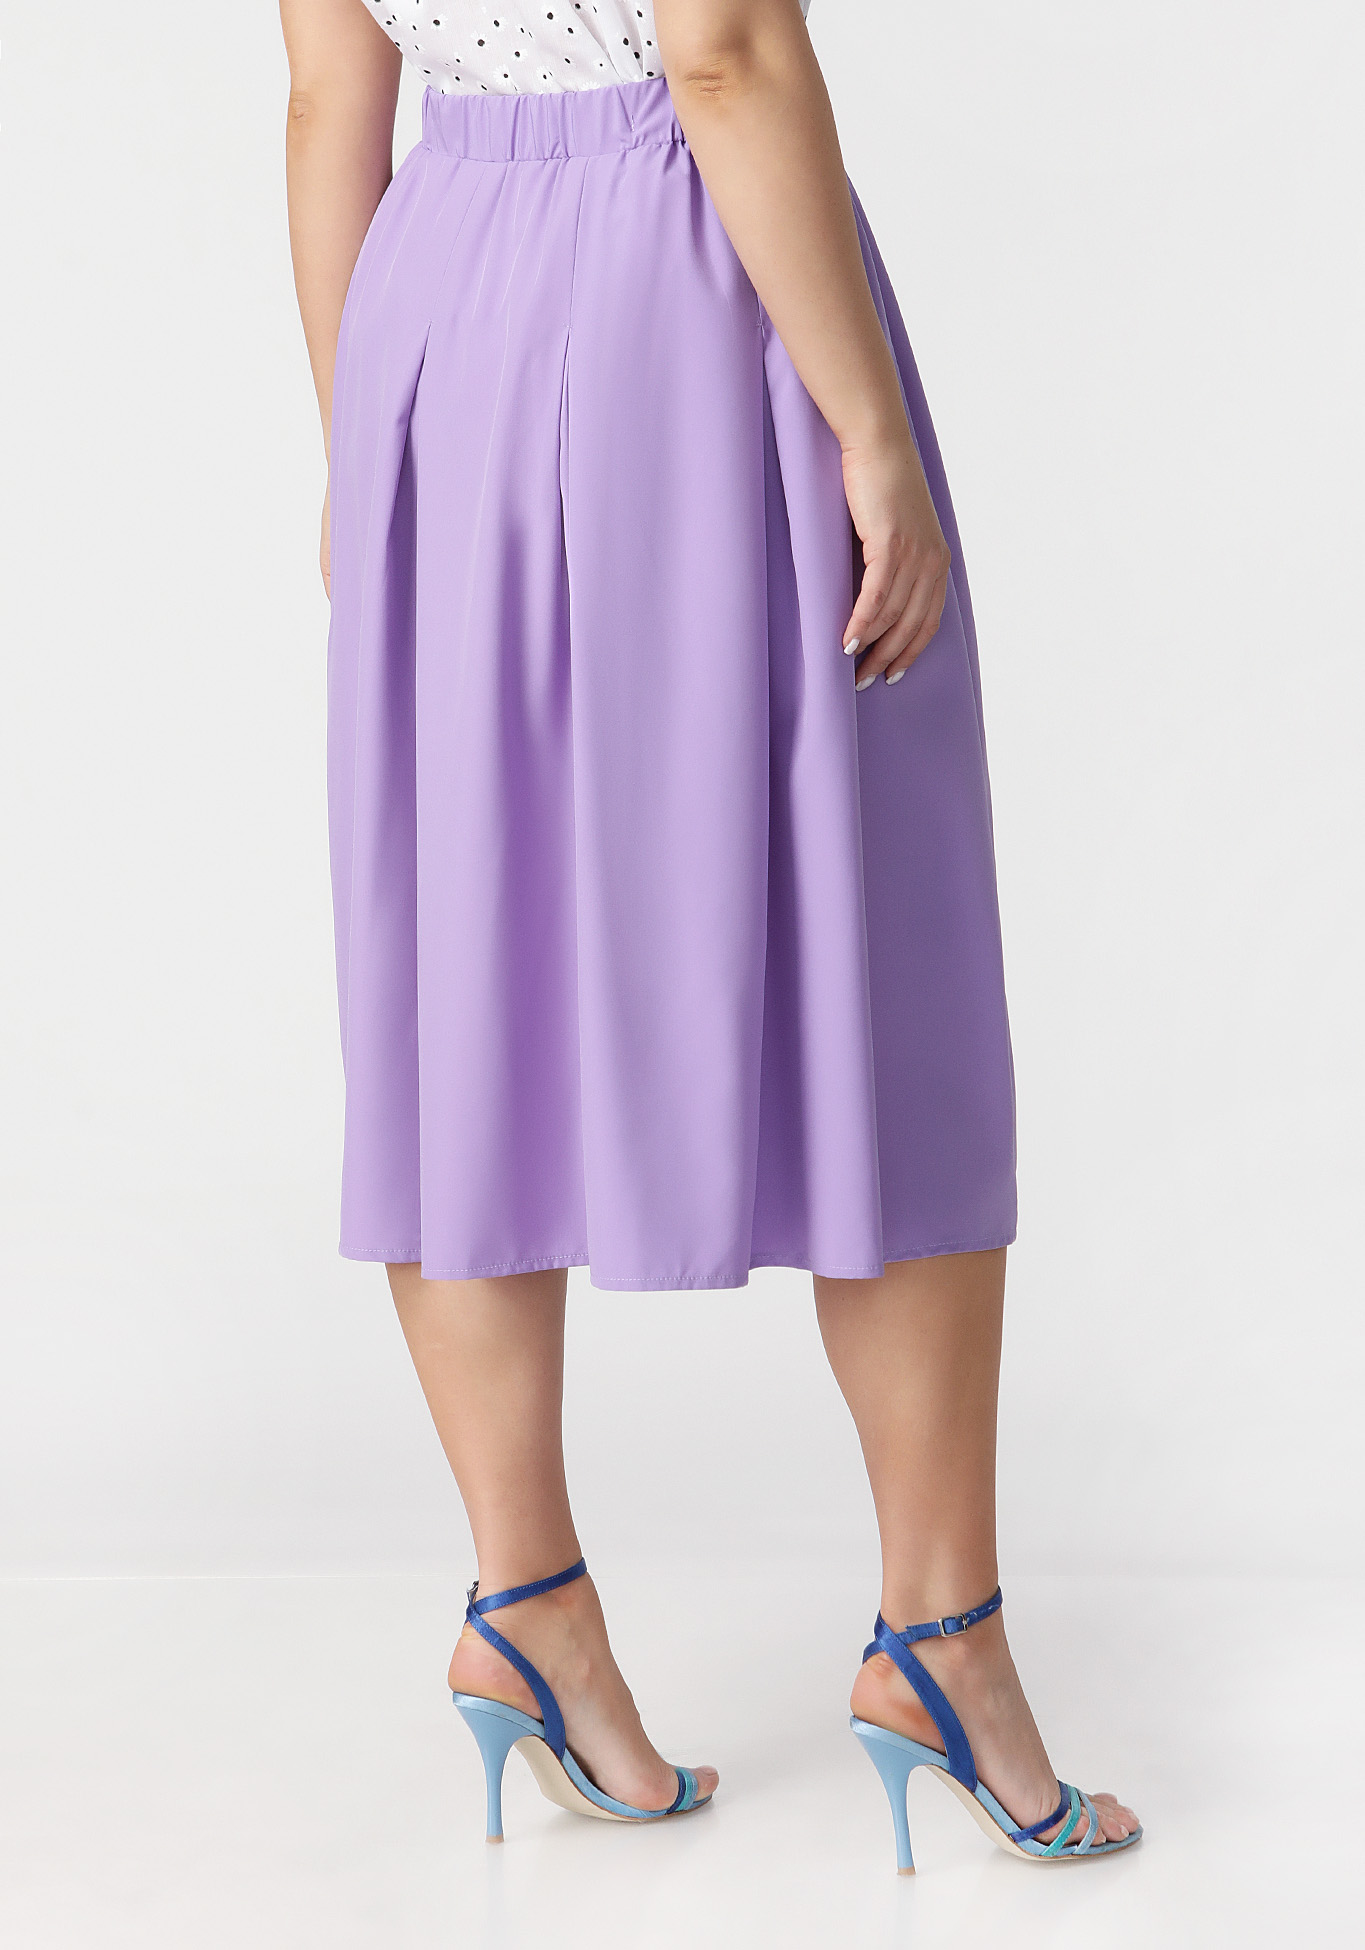 Юбка "Агнес", размер 50, цвет фиолетовый - фото 6